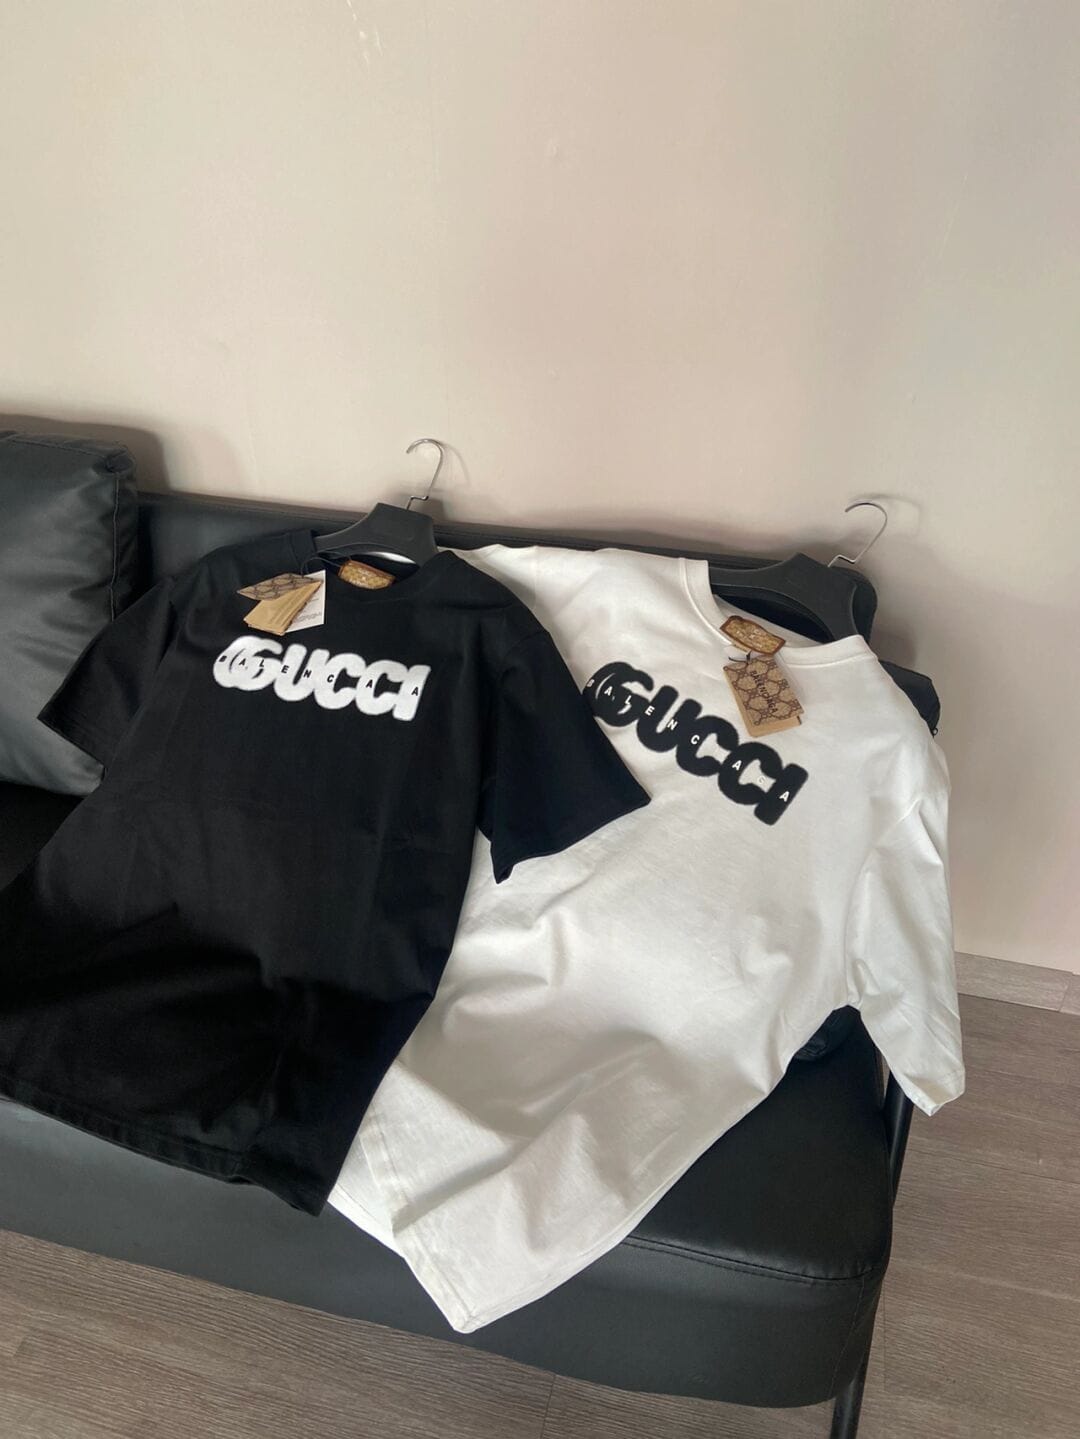 Gucci X Balenciaga T-Shirt Black GC013